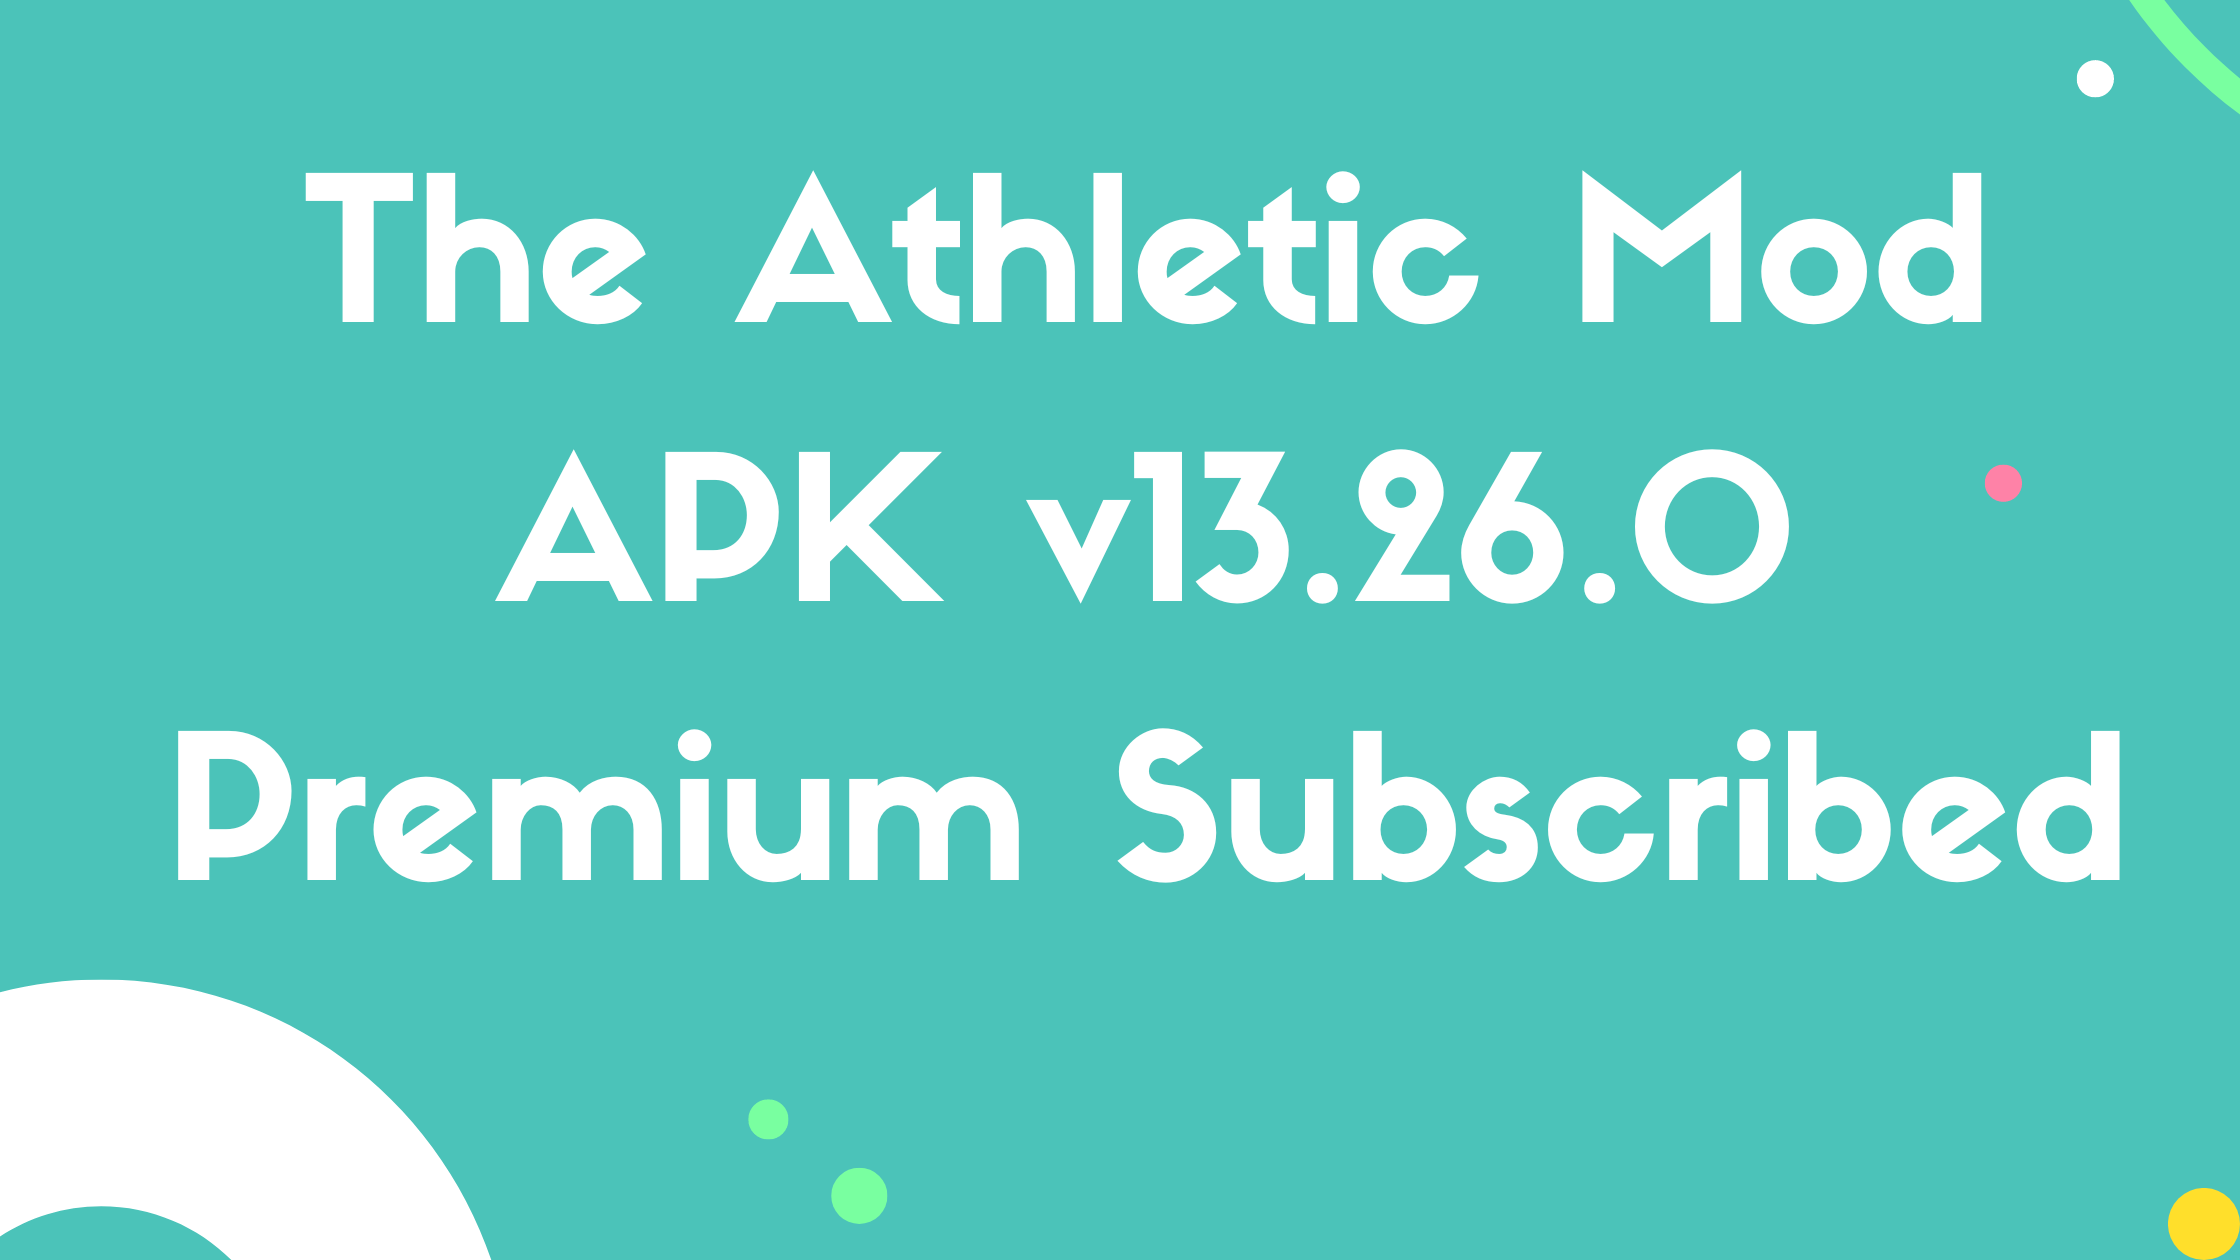 The Athletic Mod APK v13.26.0 Premium Subscribed